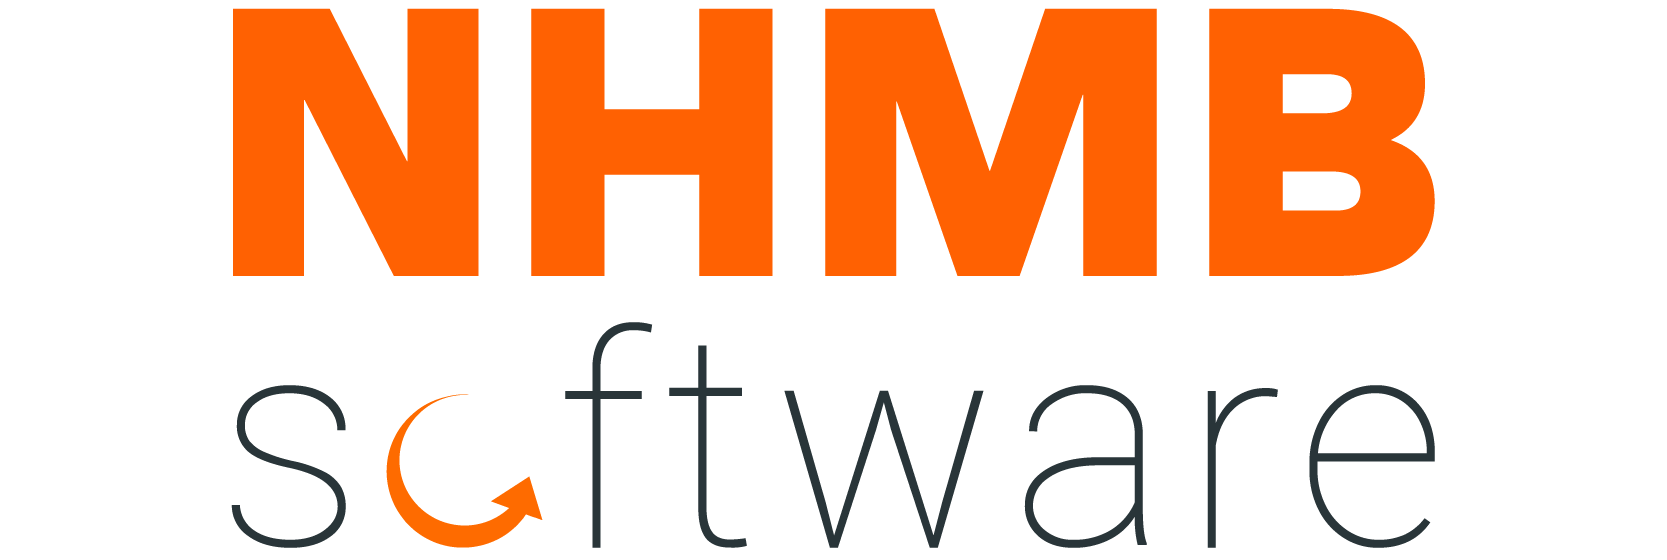 NHMB software logo